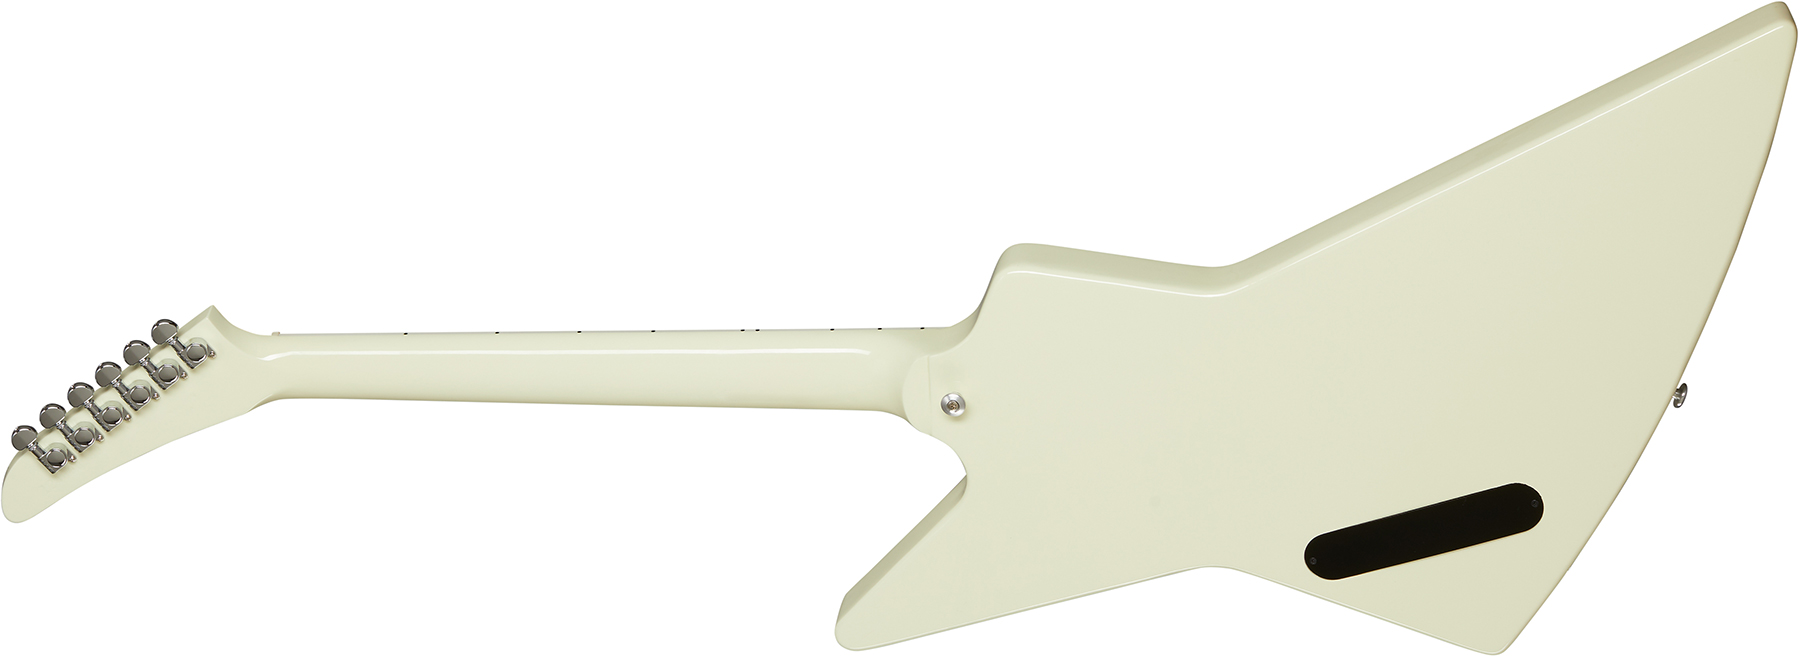 Gibson Explorer 70s Original 2h Ht Rw - Classic White - Retro rock electric guitar - Variation 1